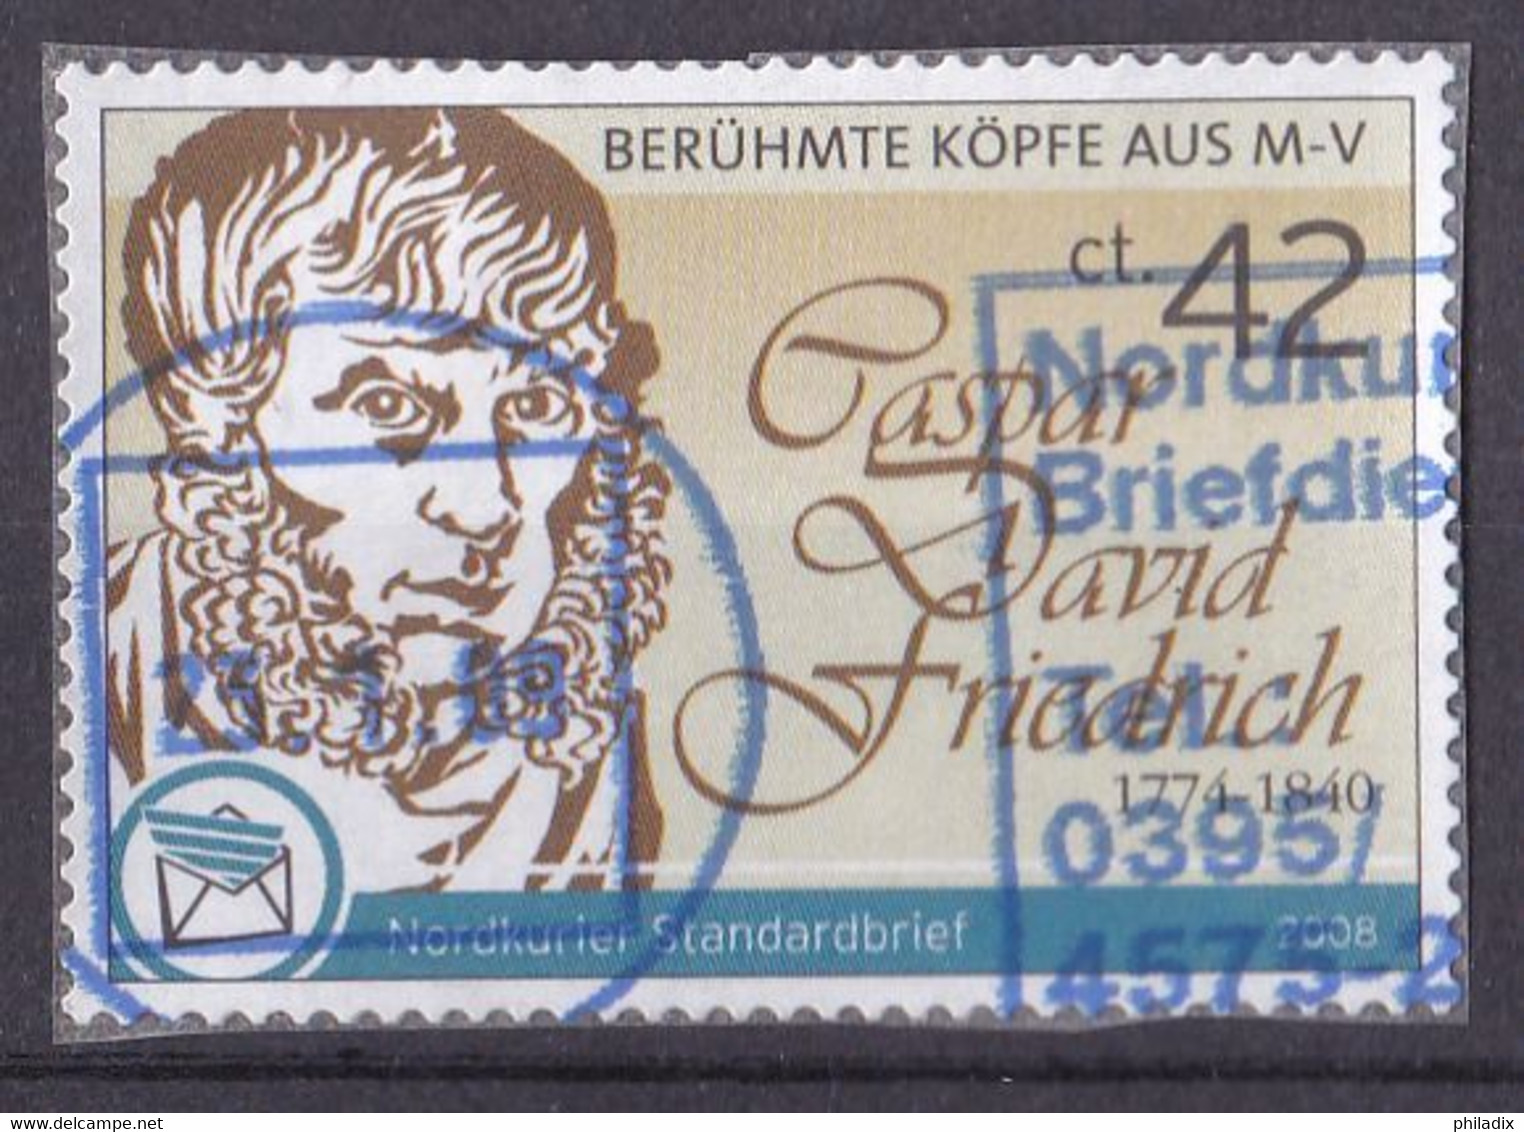 BRD Privatpost Nordkurier (42 Cent) Berühmte Köpfe Aus M-V Caspar David Friedrich (A1-23) - Privatpost